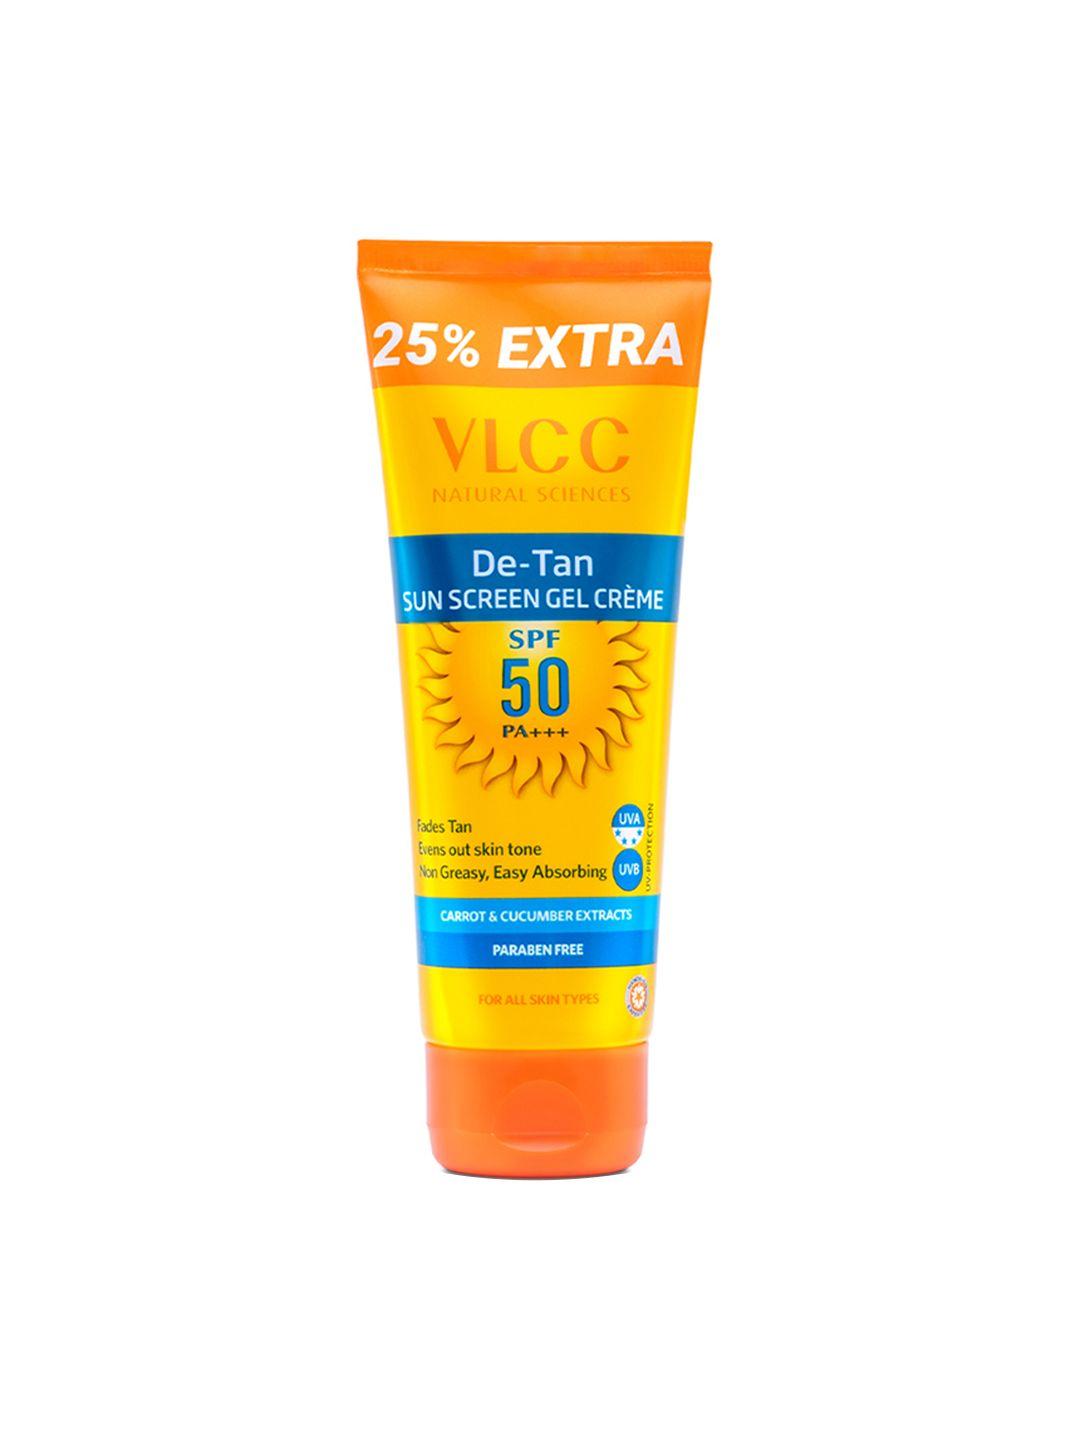 VLCC De Tan SPF 50 PA+++ Sunscreen Gel Cream For Sun Protection - 100 g with 25 g Extra